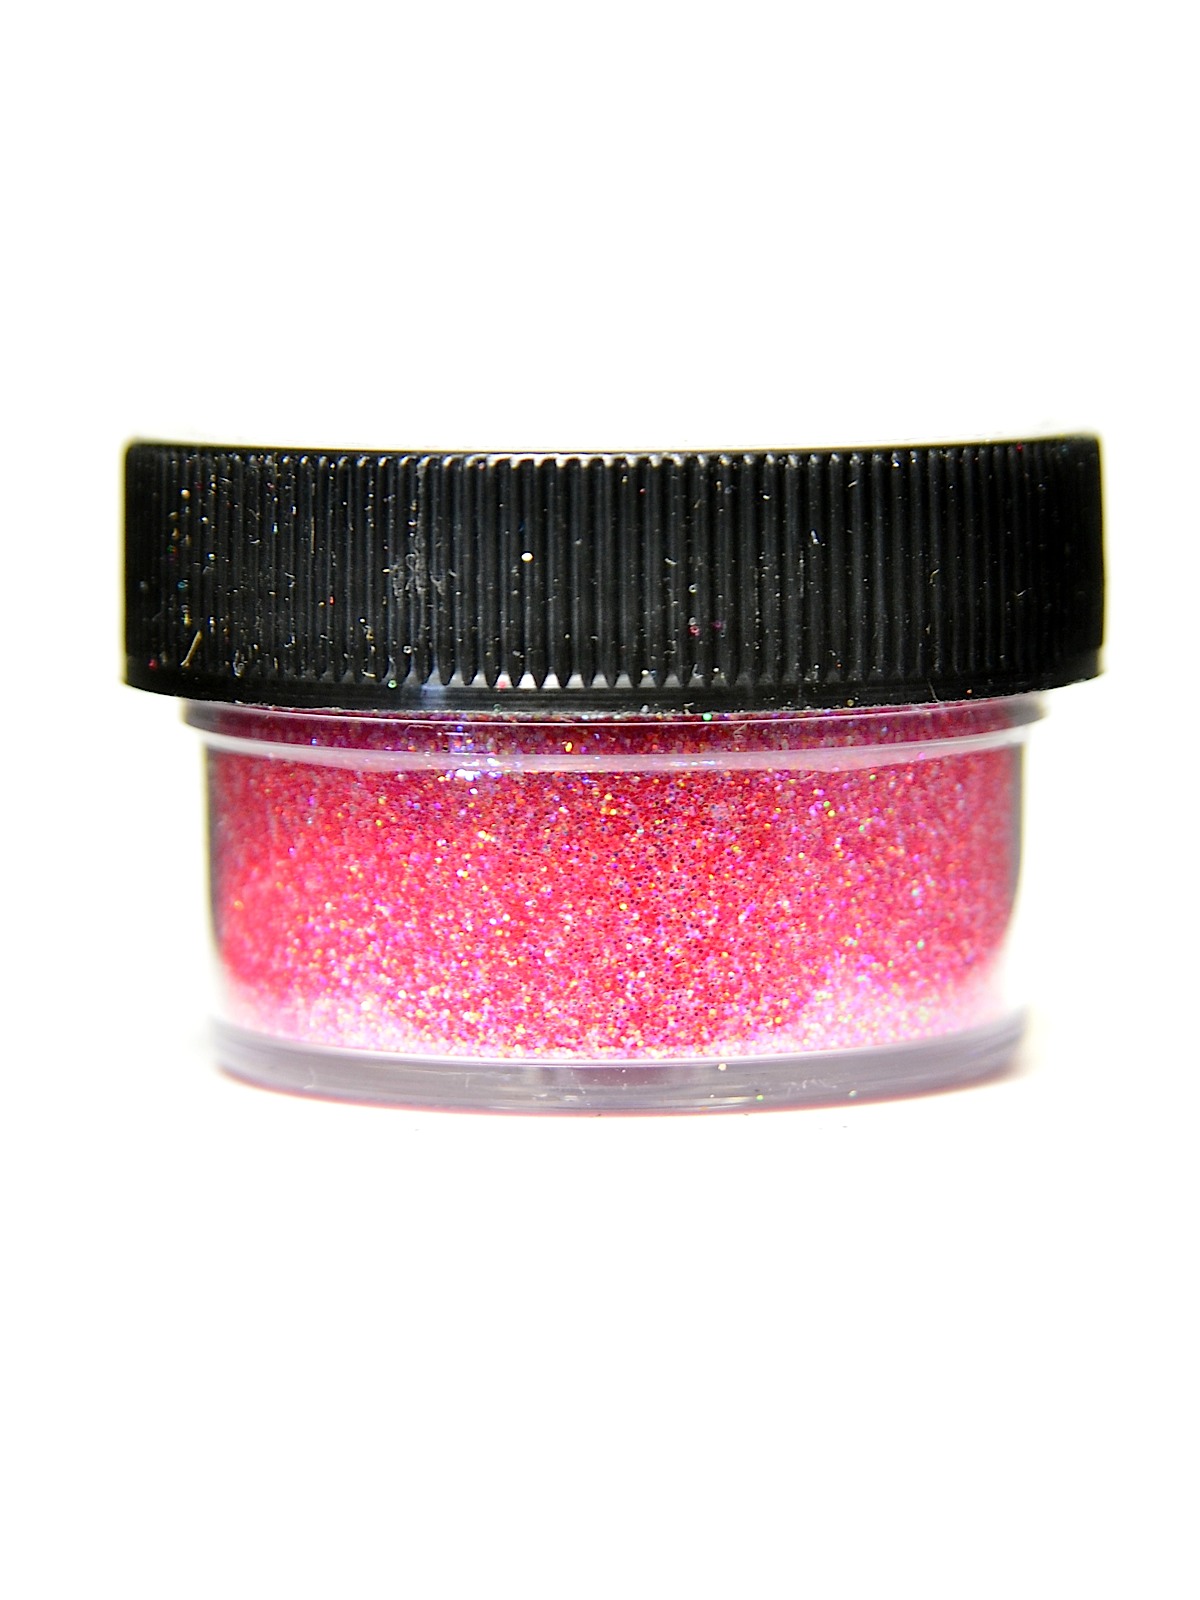 Ultrafine Transparent Glitter Lipstick 1 2 Oz. Jar